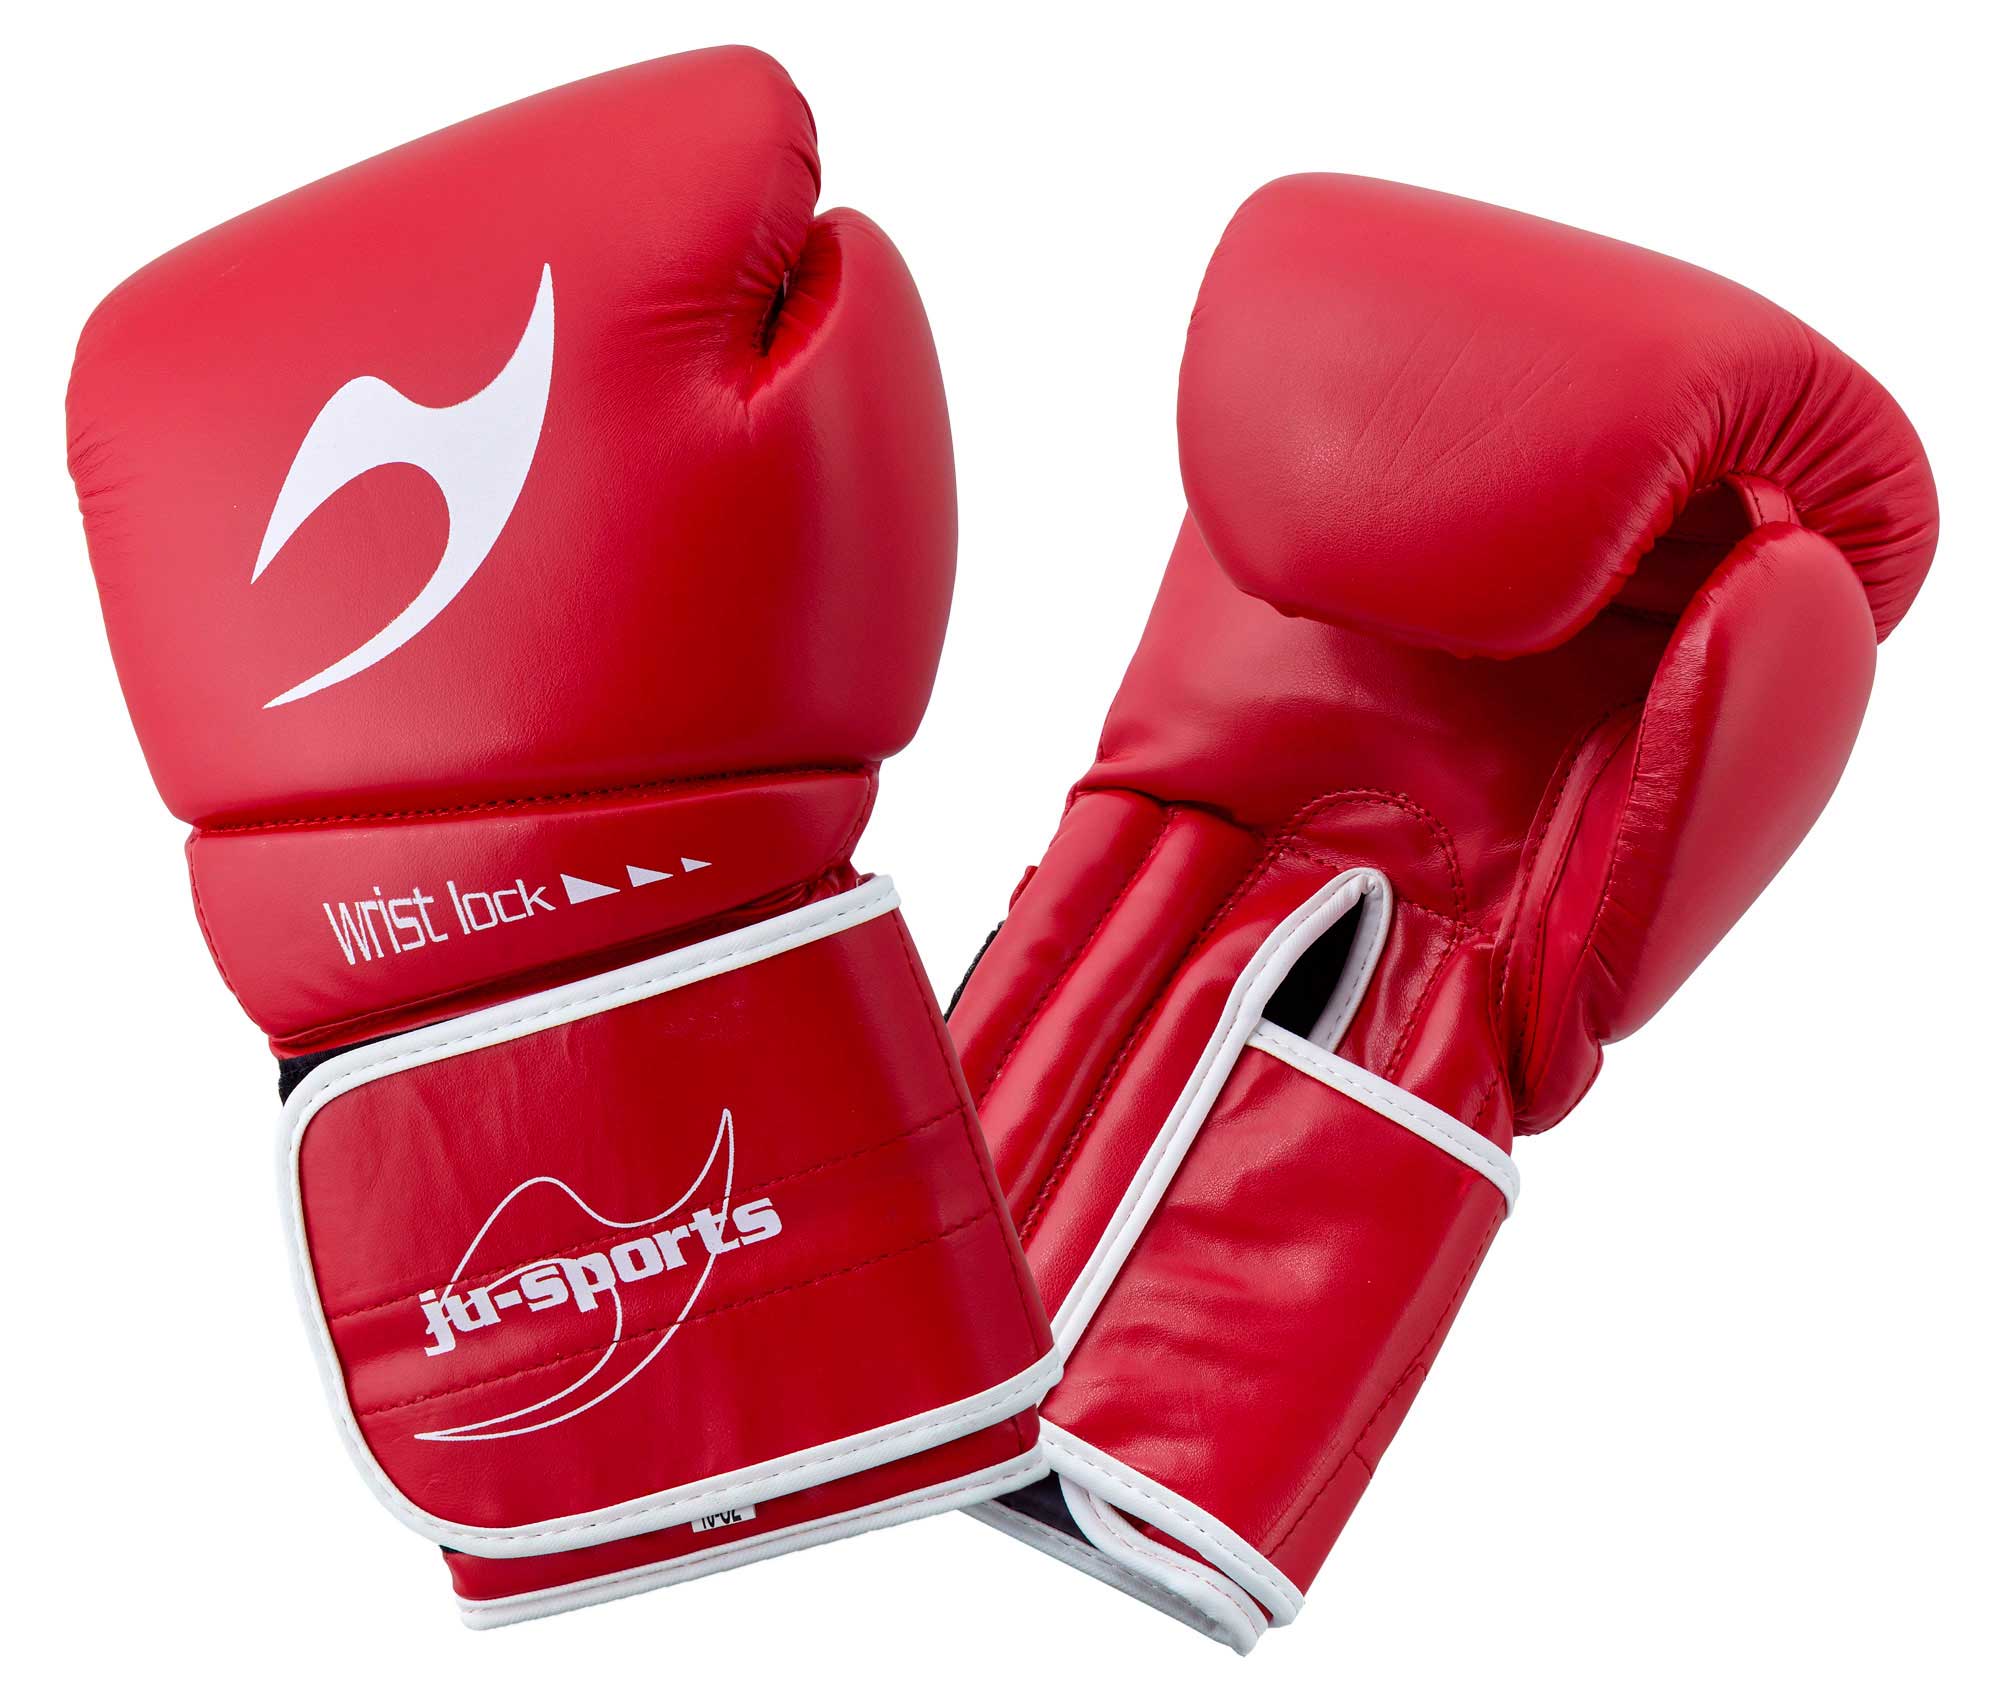 Ju-Sports Boxing Gloves C16 Competitor Pro PU red 10 oz